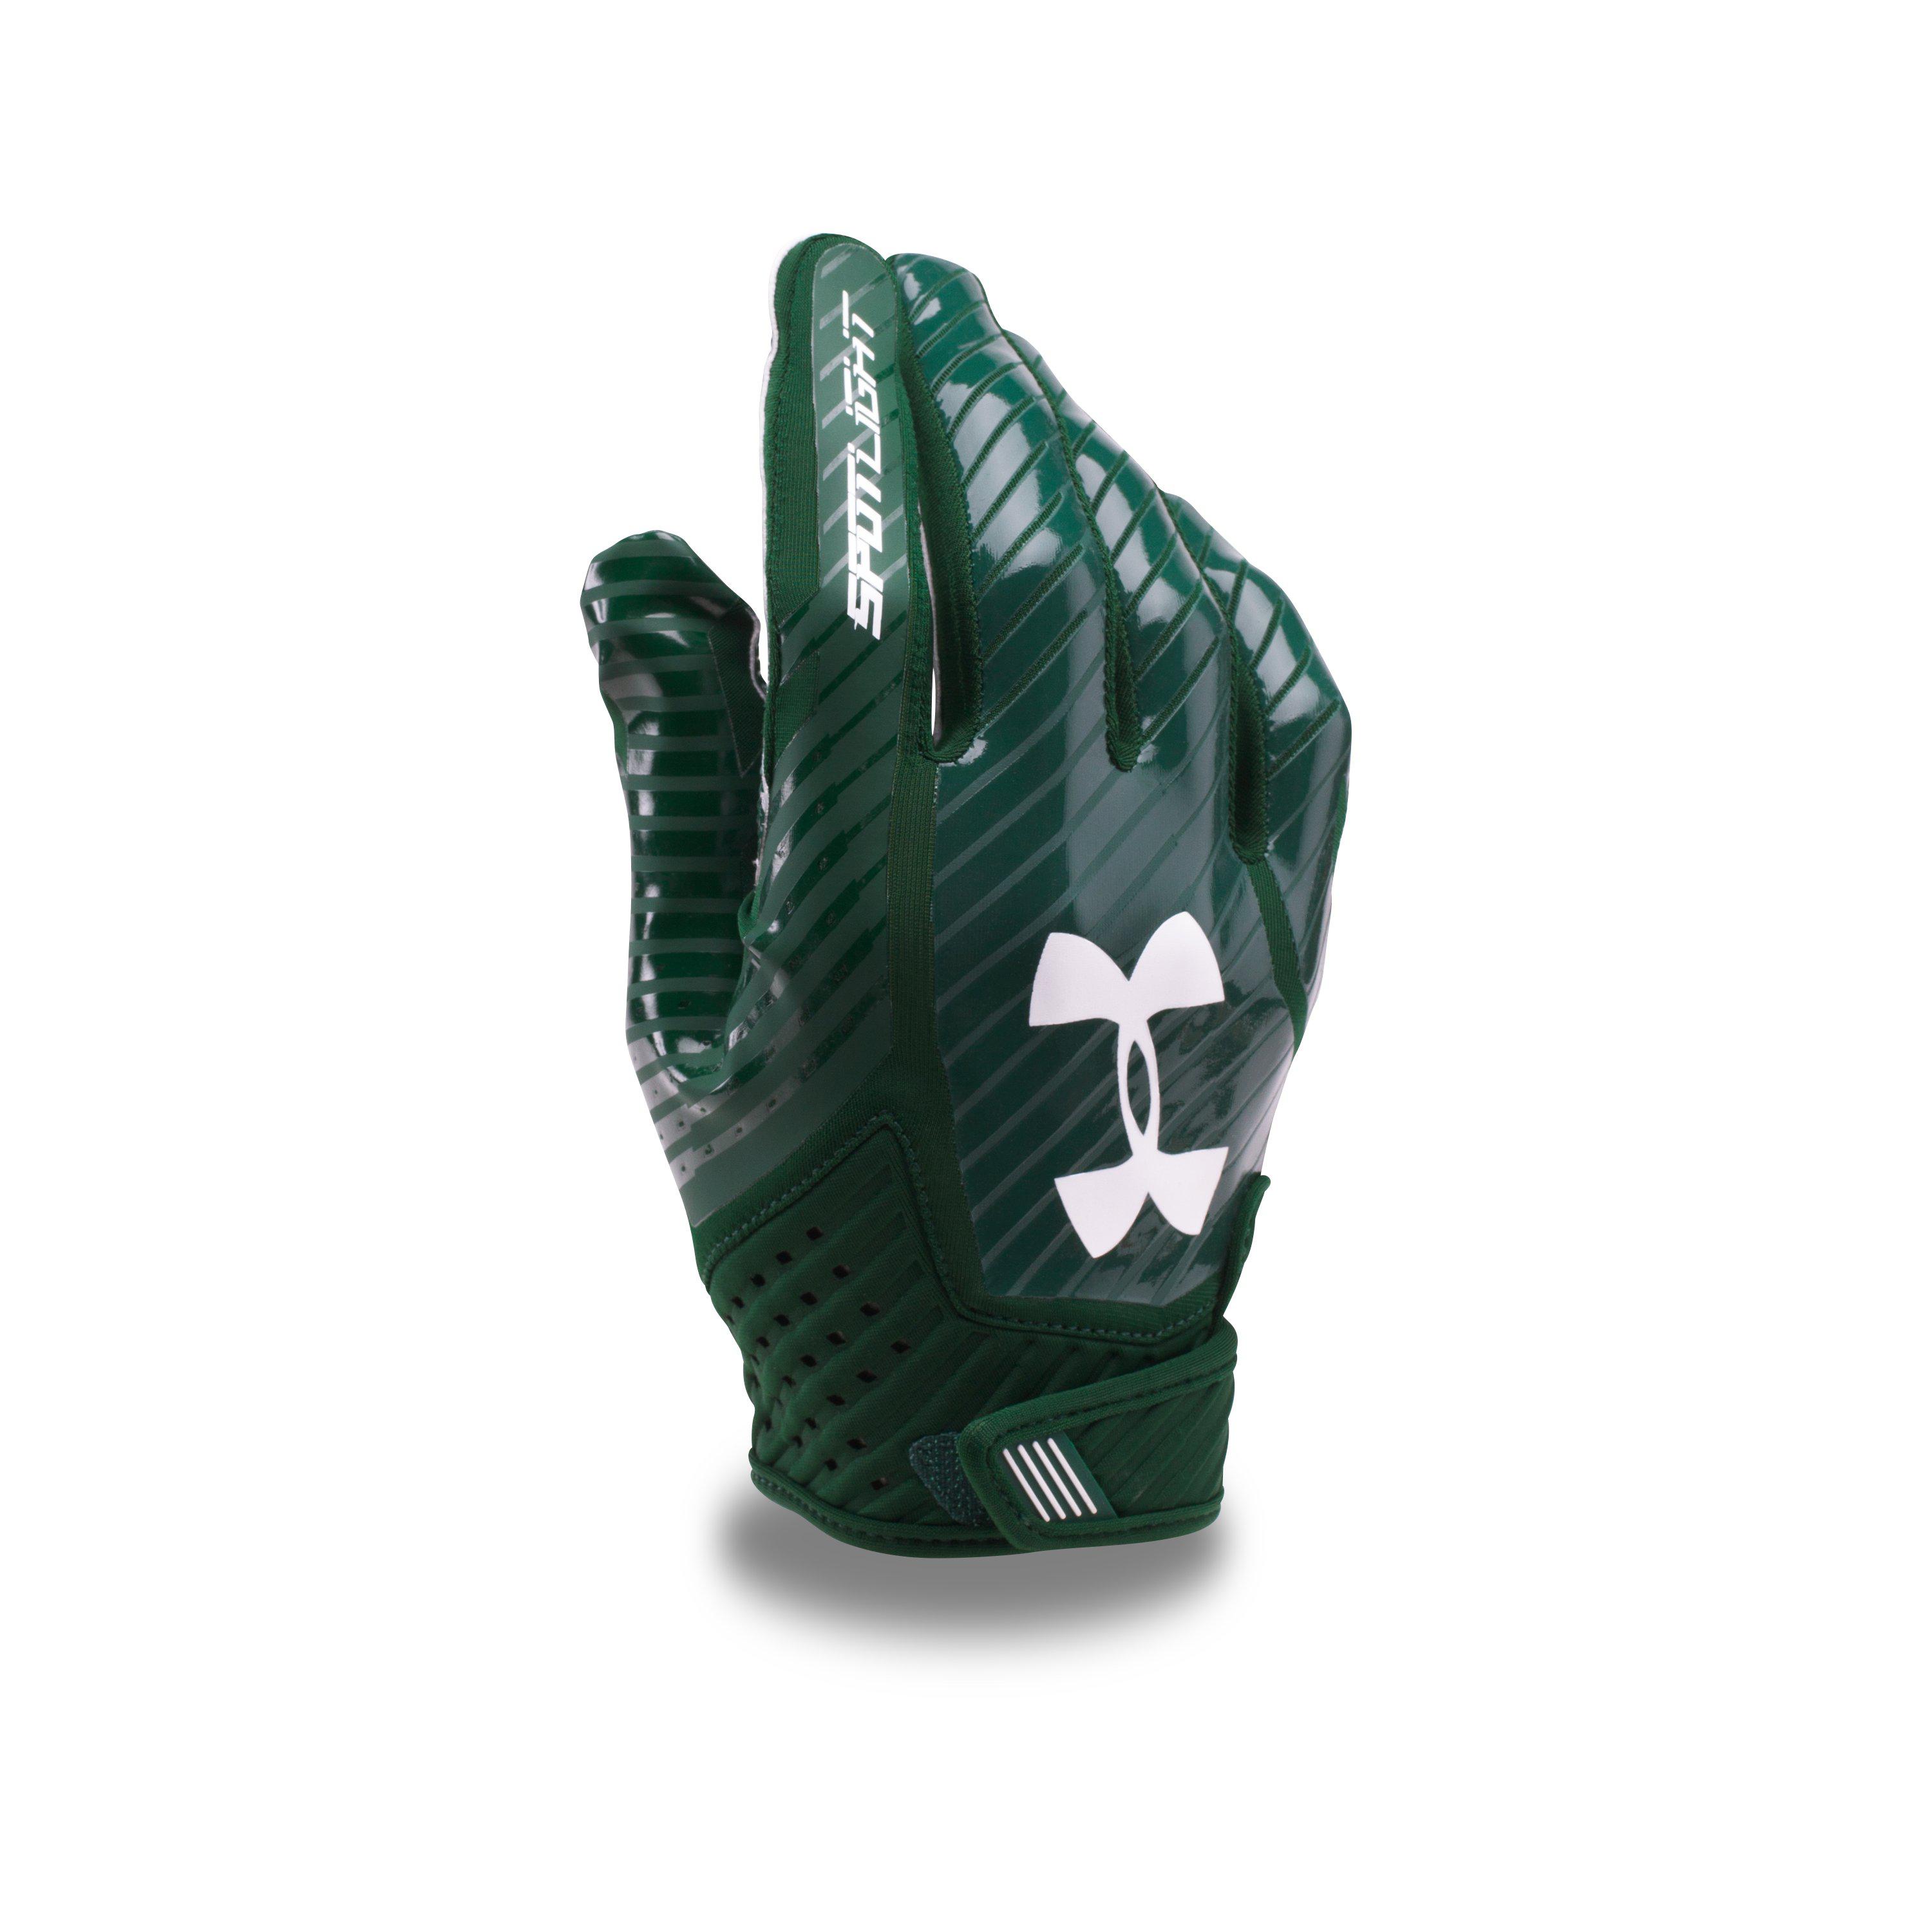 green under armour gloves